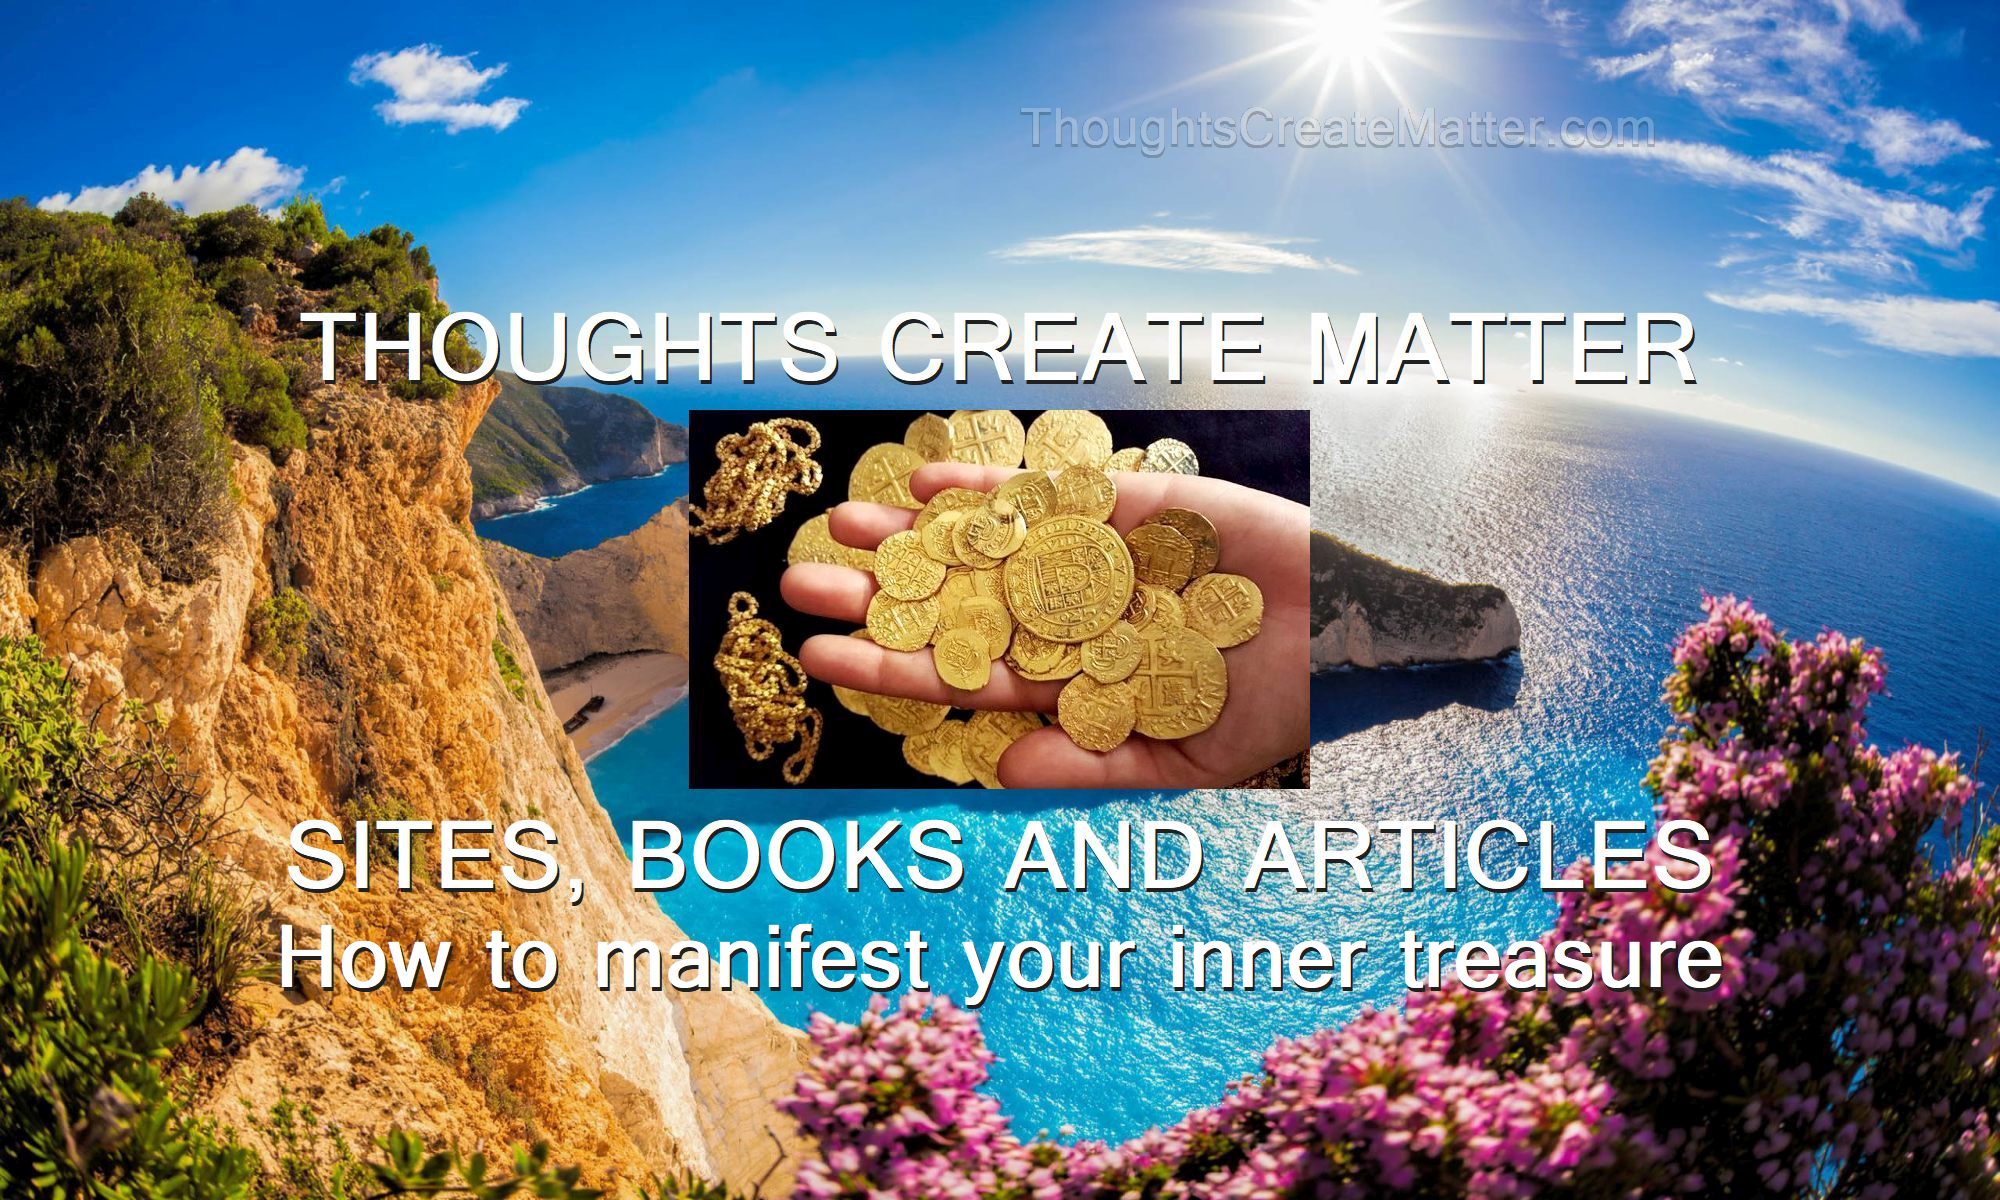 paradise-depicts-Metaphysical-philosophy-Metaphysics-self-help-improvement-consciousness-books-eBooks